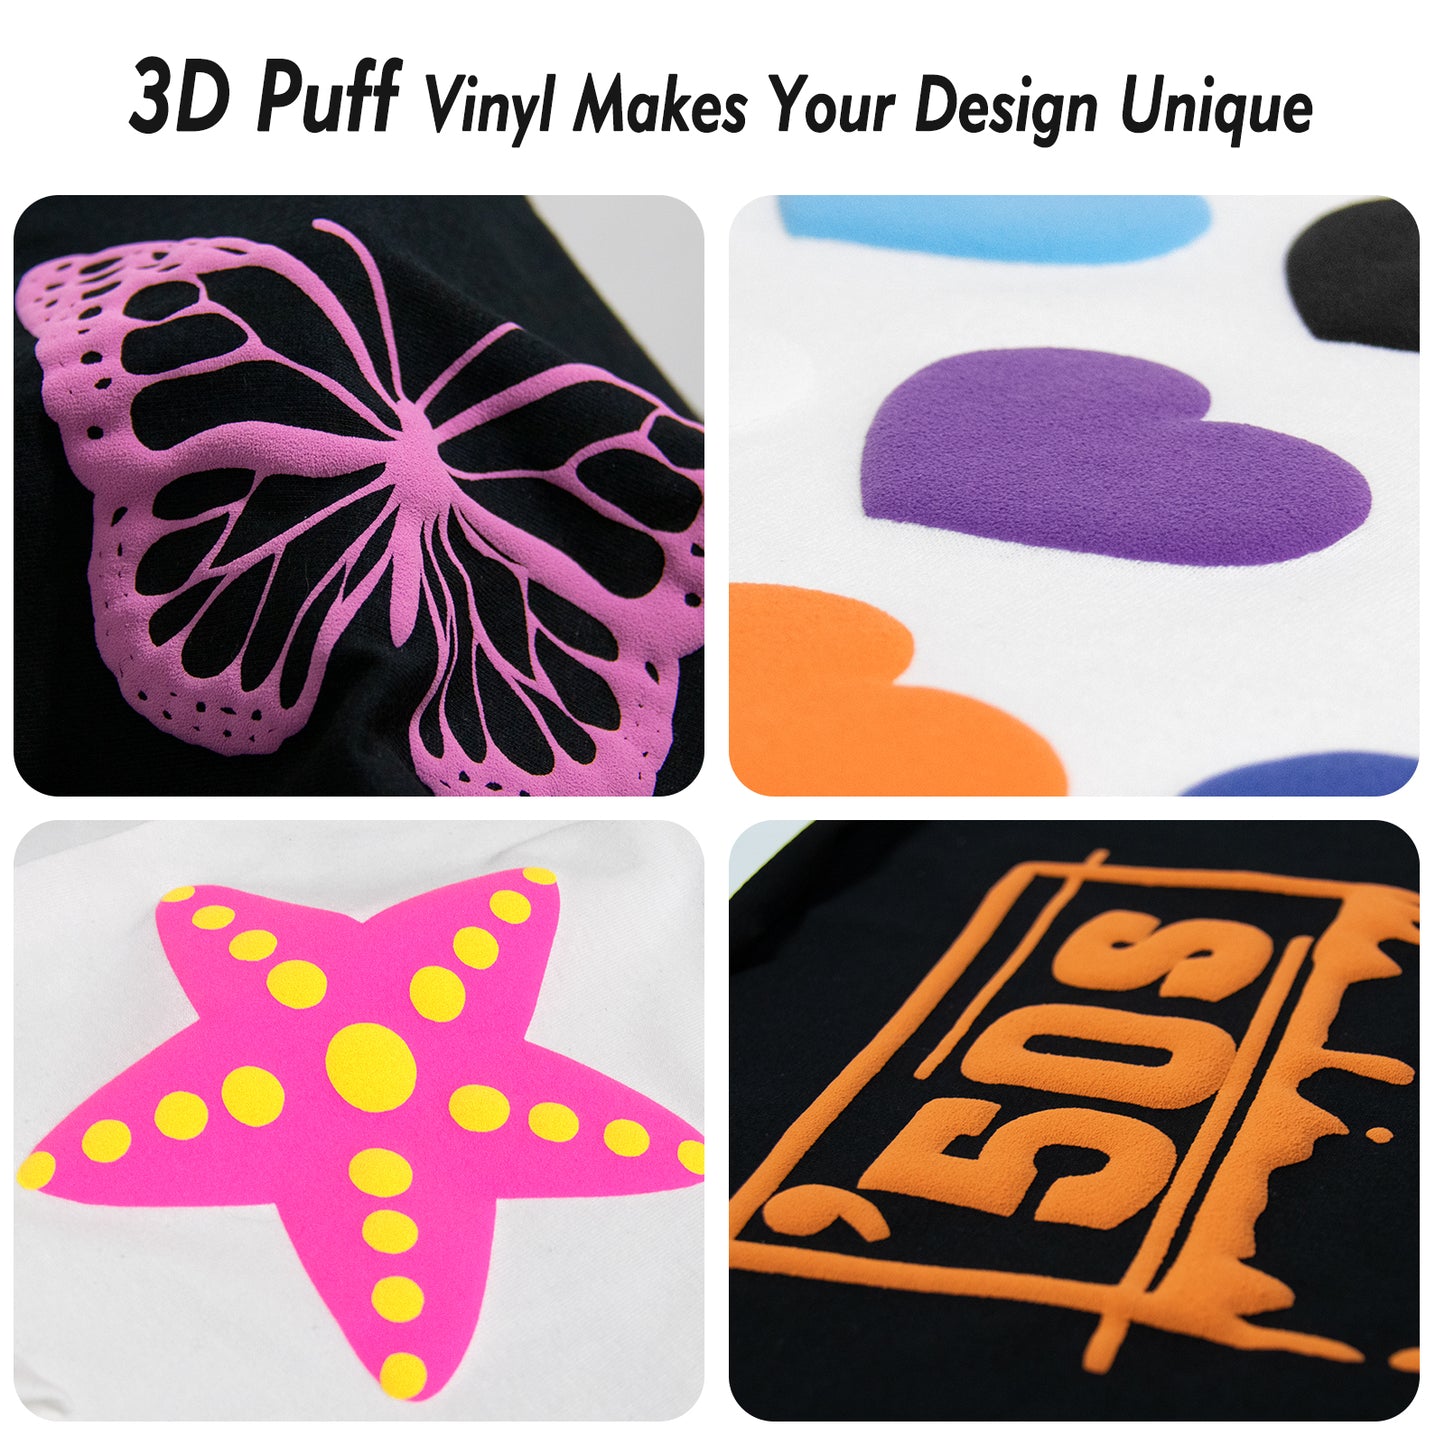  GO2CRAFT 3D Puff Vinyl Heat Transfer, 14 Sheets Easy